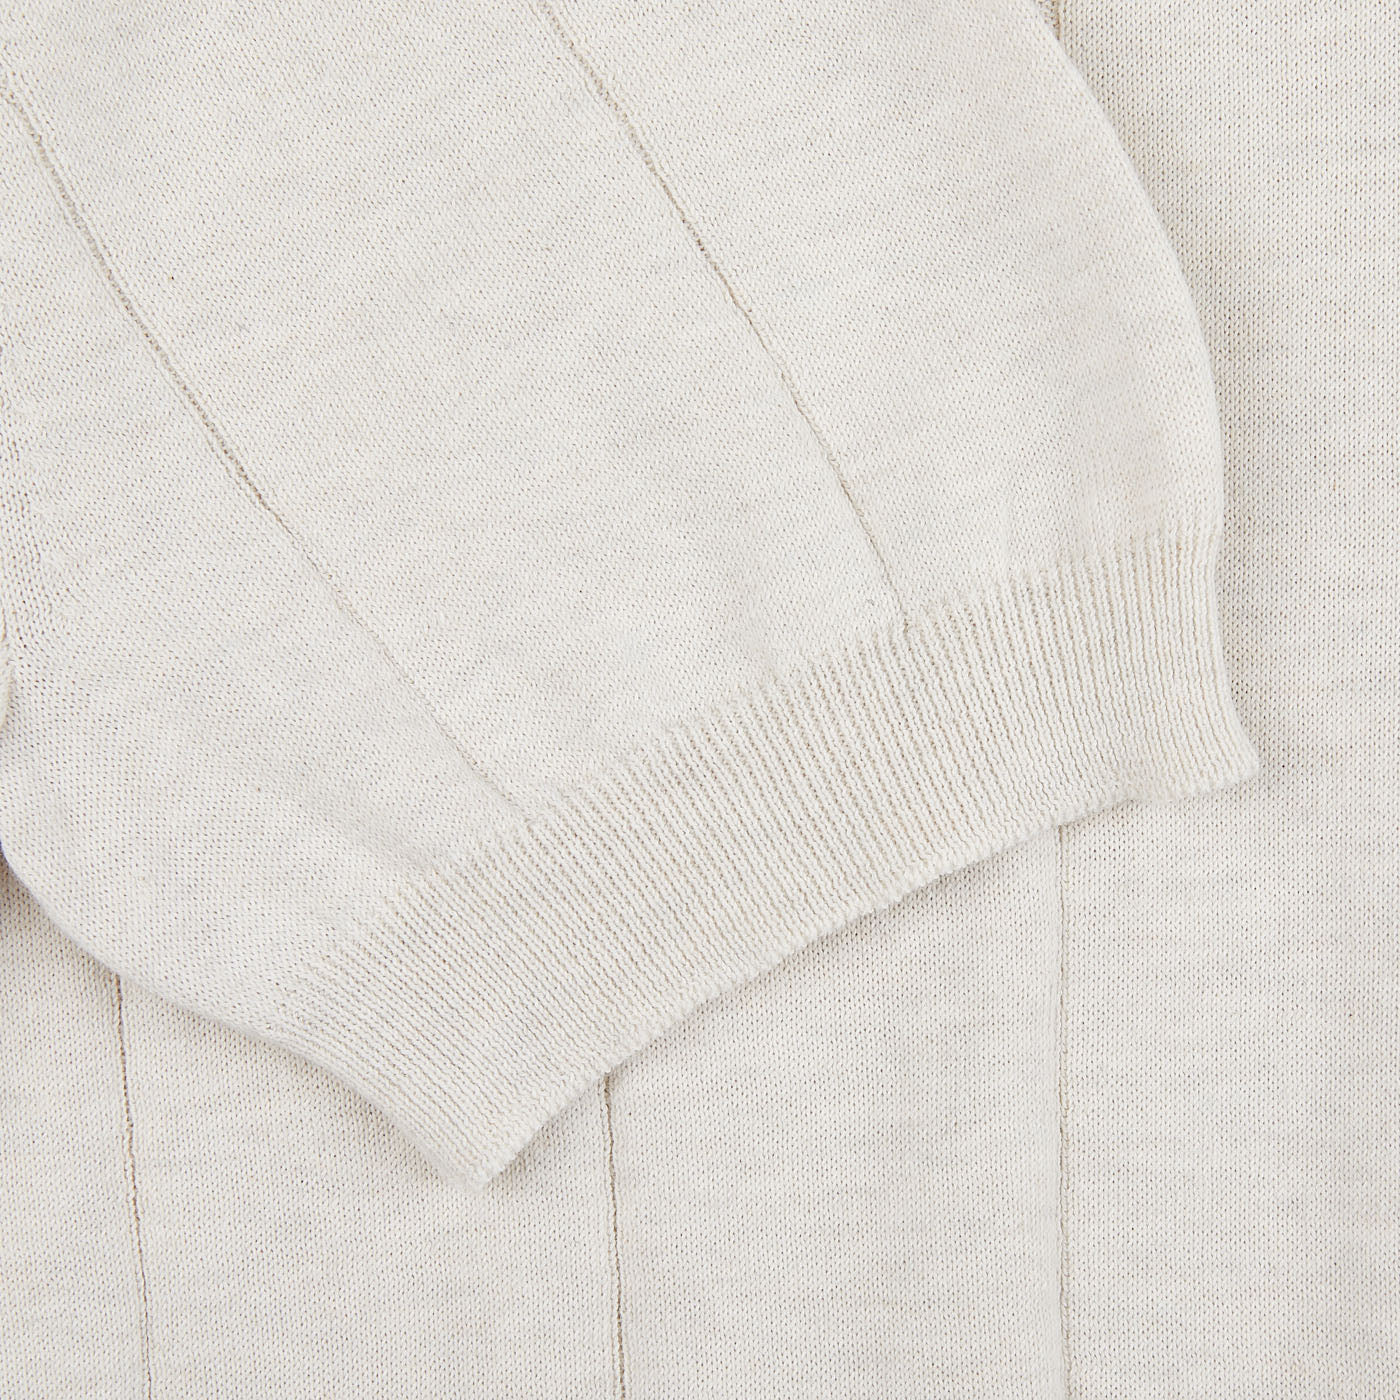 A close up image of a Cream Cotton Capri Collar Polo Shirt by Gran Sasso.